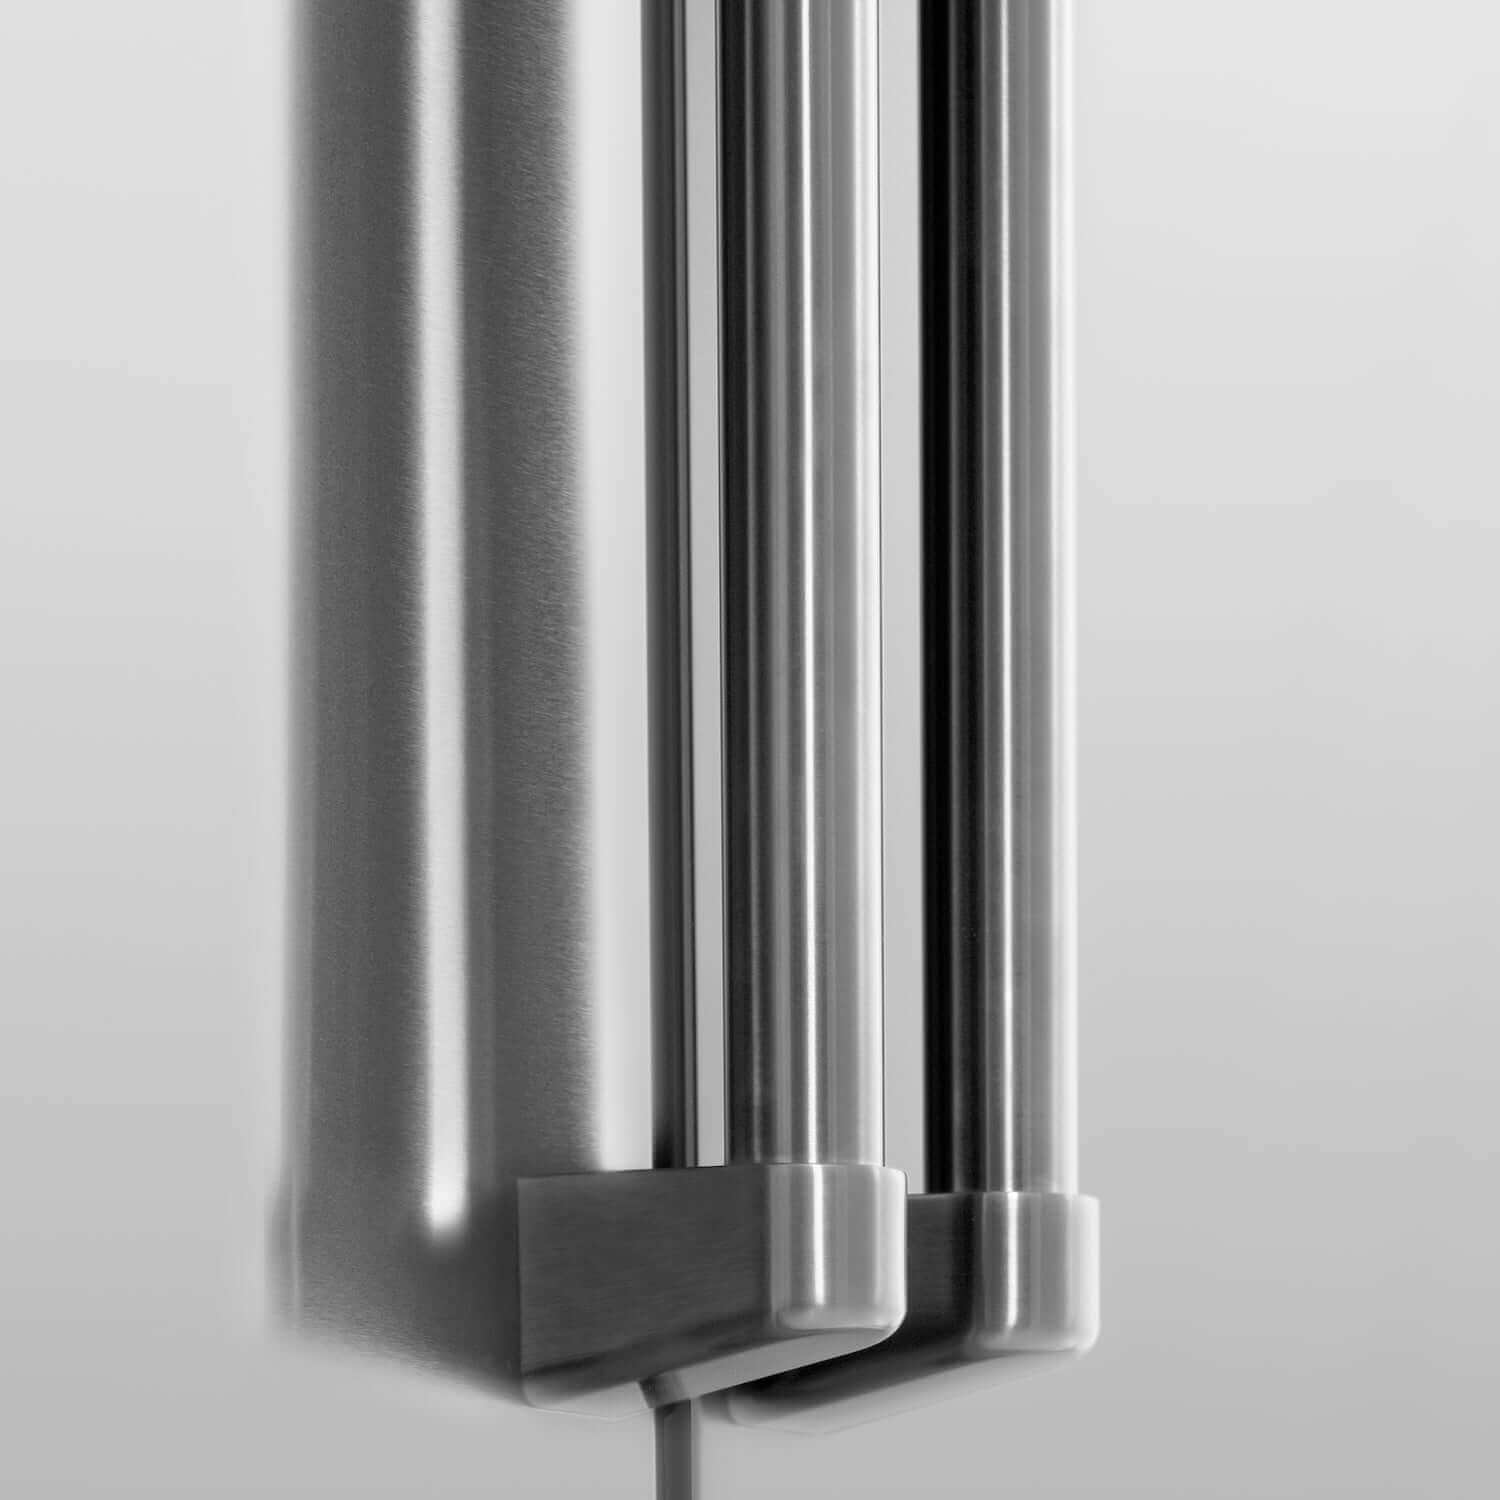 Stainless steel handles on ZLINE 36" French door refrigerator.